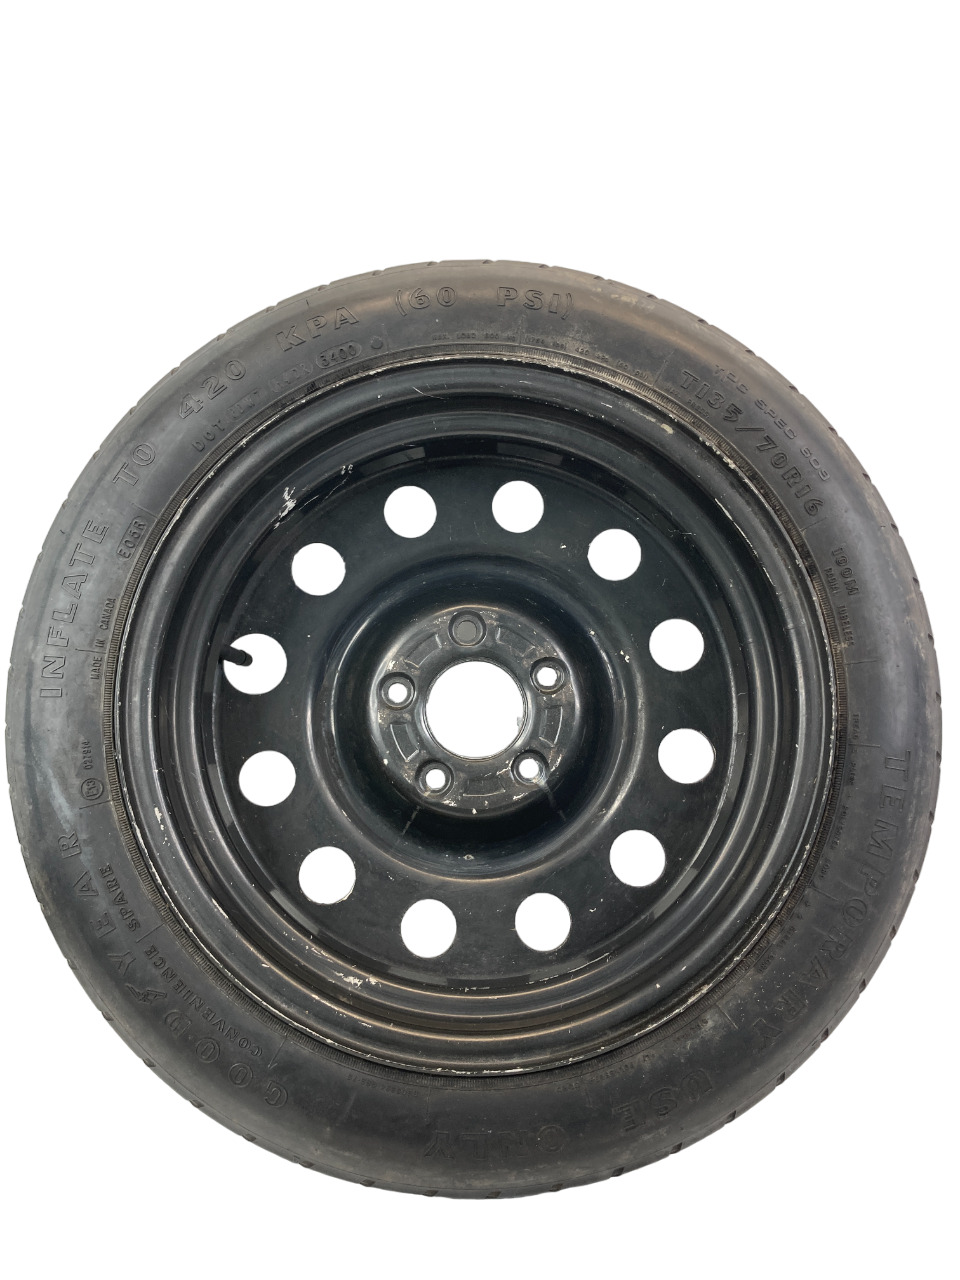 2001-2005 Pontiac Aztek Emergency Spare Tire Compact Donut Wheel T135/70R16 OEM